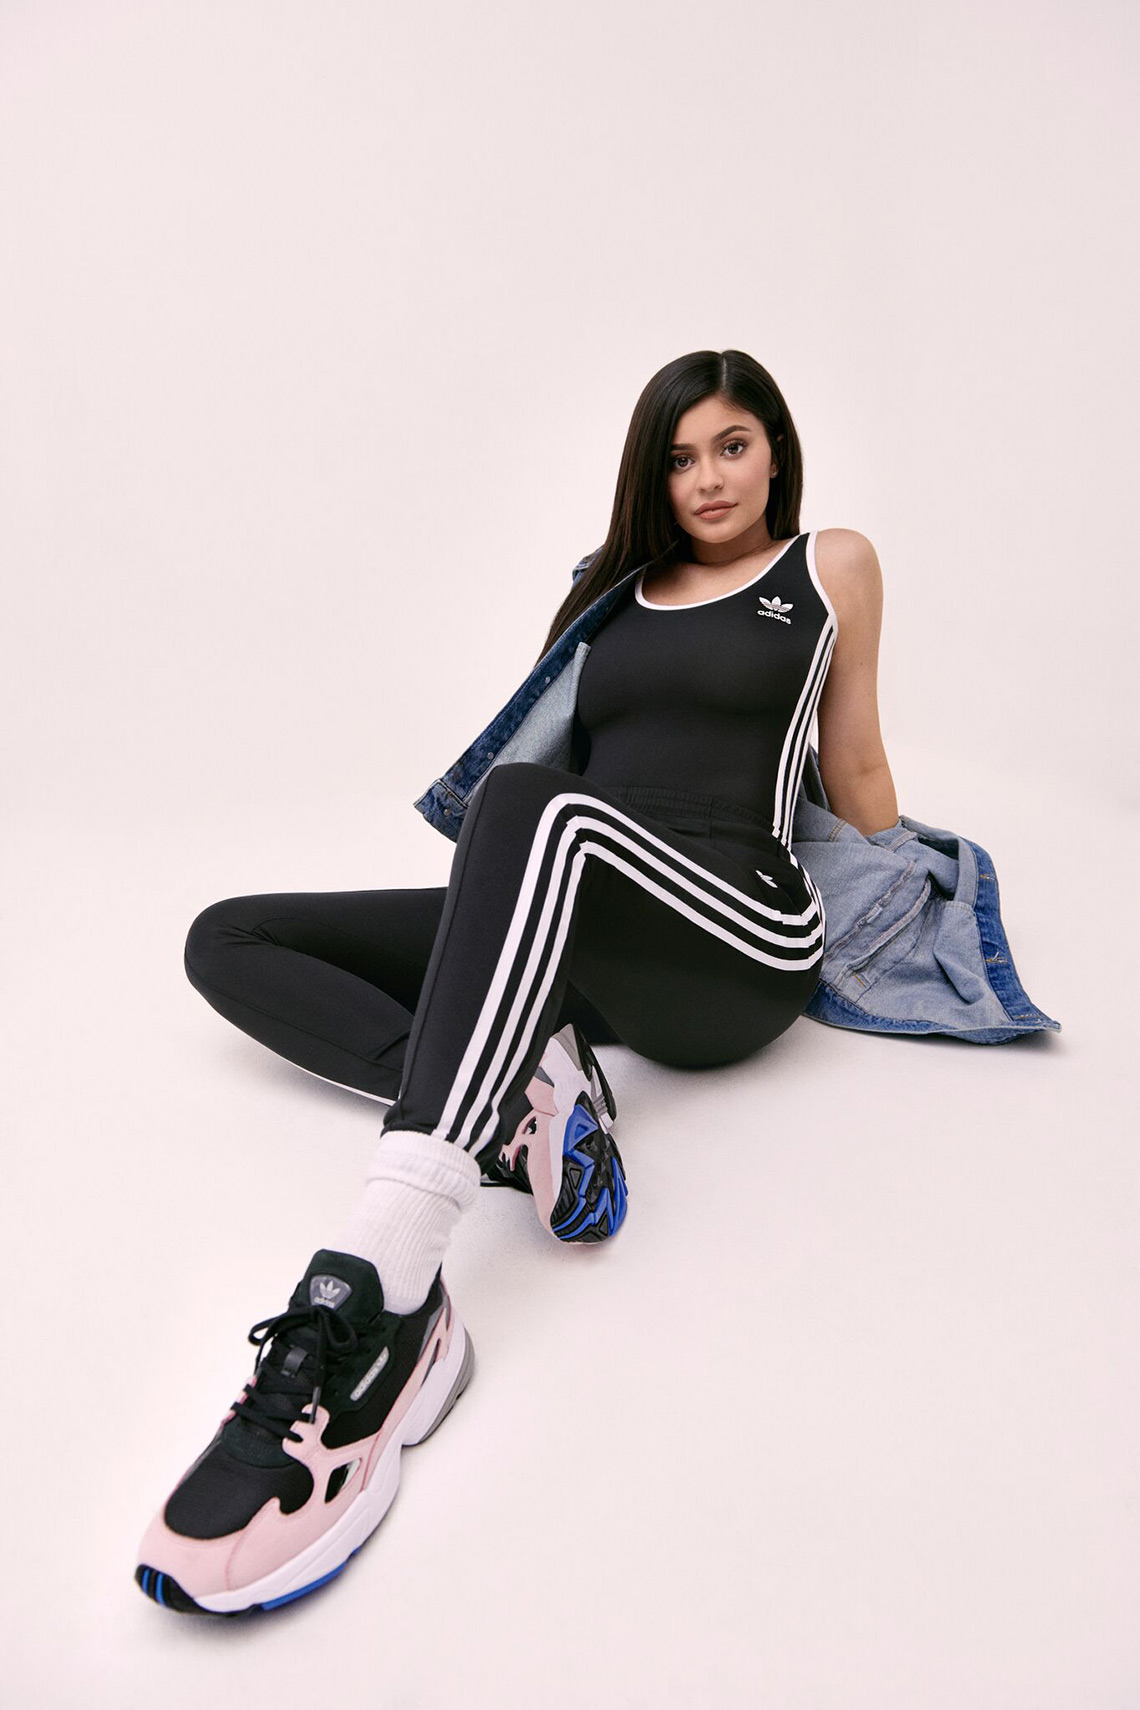 Kylie Jenner Adidas Falcon 6